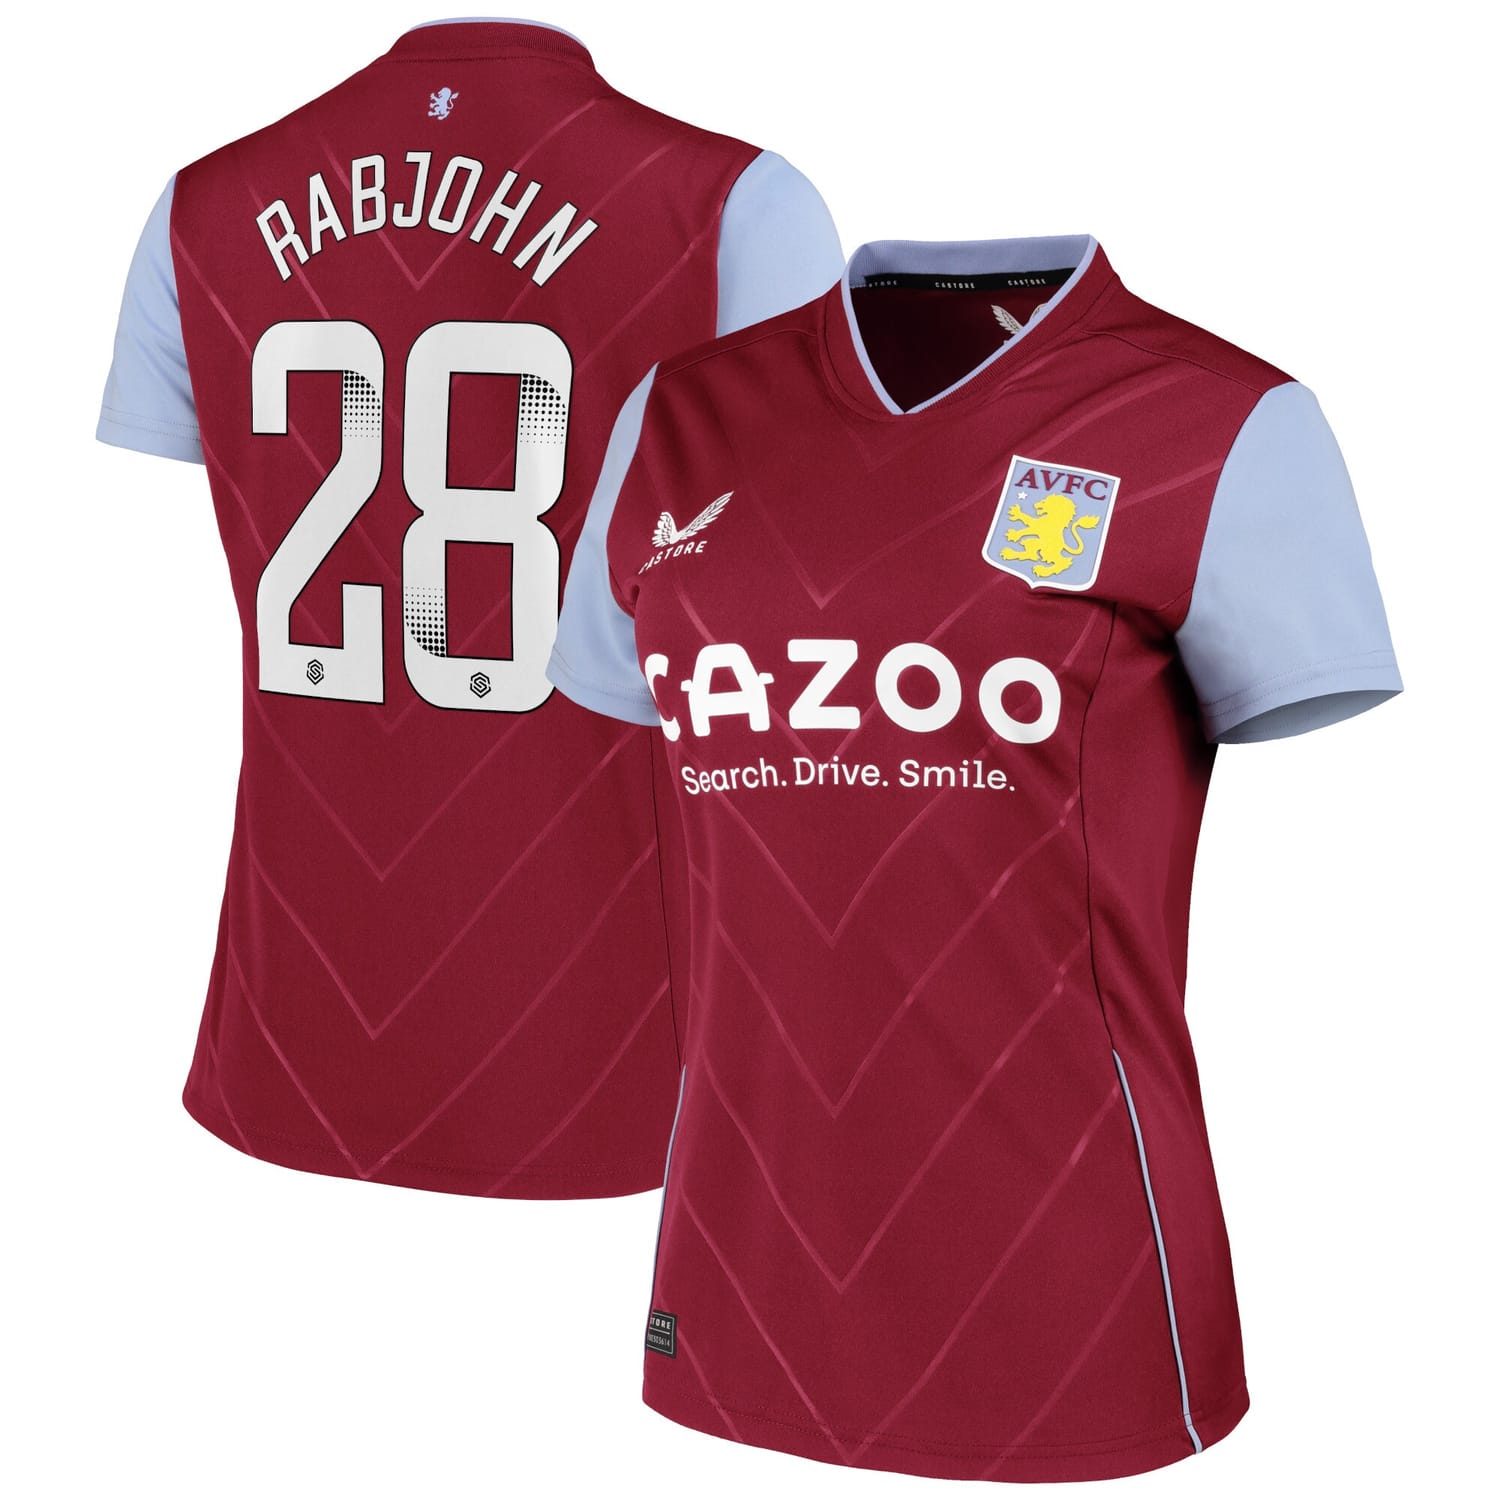 Premier League Aston Villa Home WSL Jersey Shirt 2022-23 player Evie Rabjohn 28 printing for Women